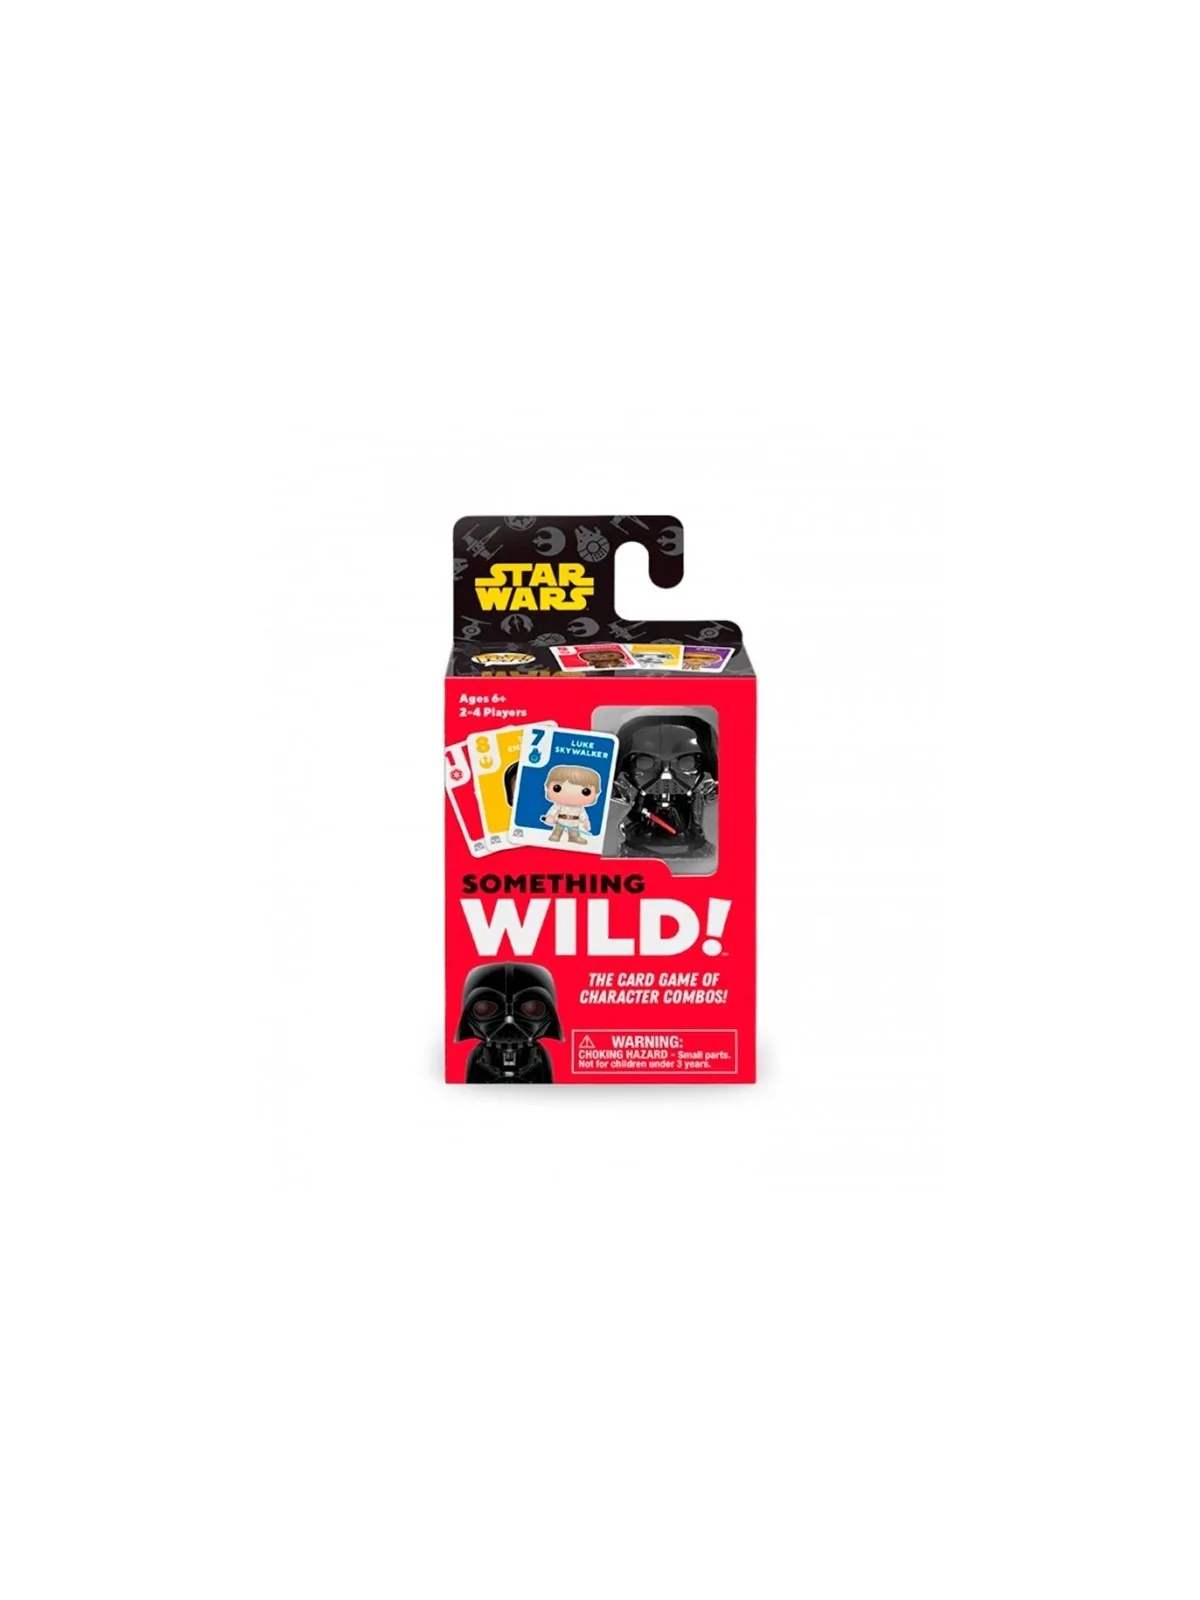 Comprar Something Wild Card Game Star Wars - Darth Vader barato al mej